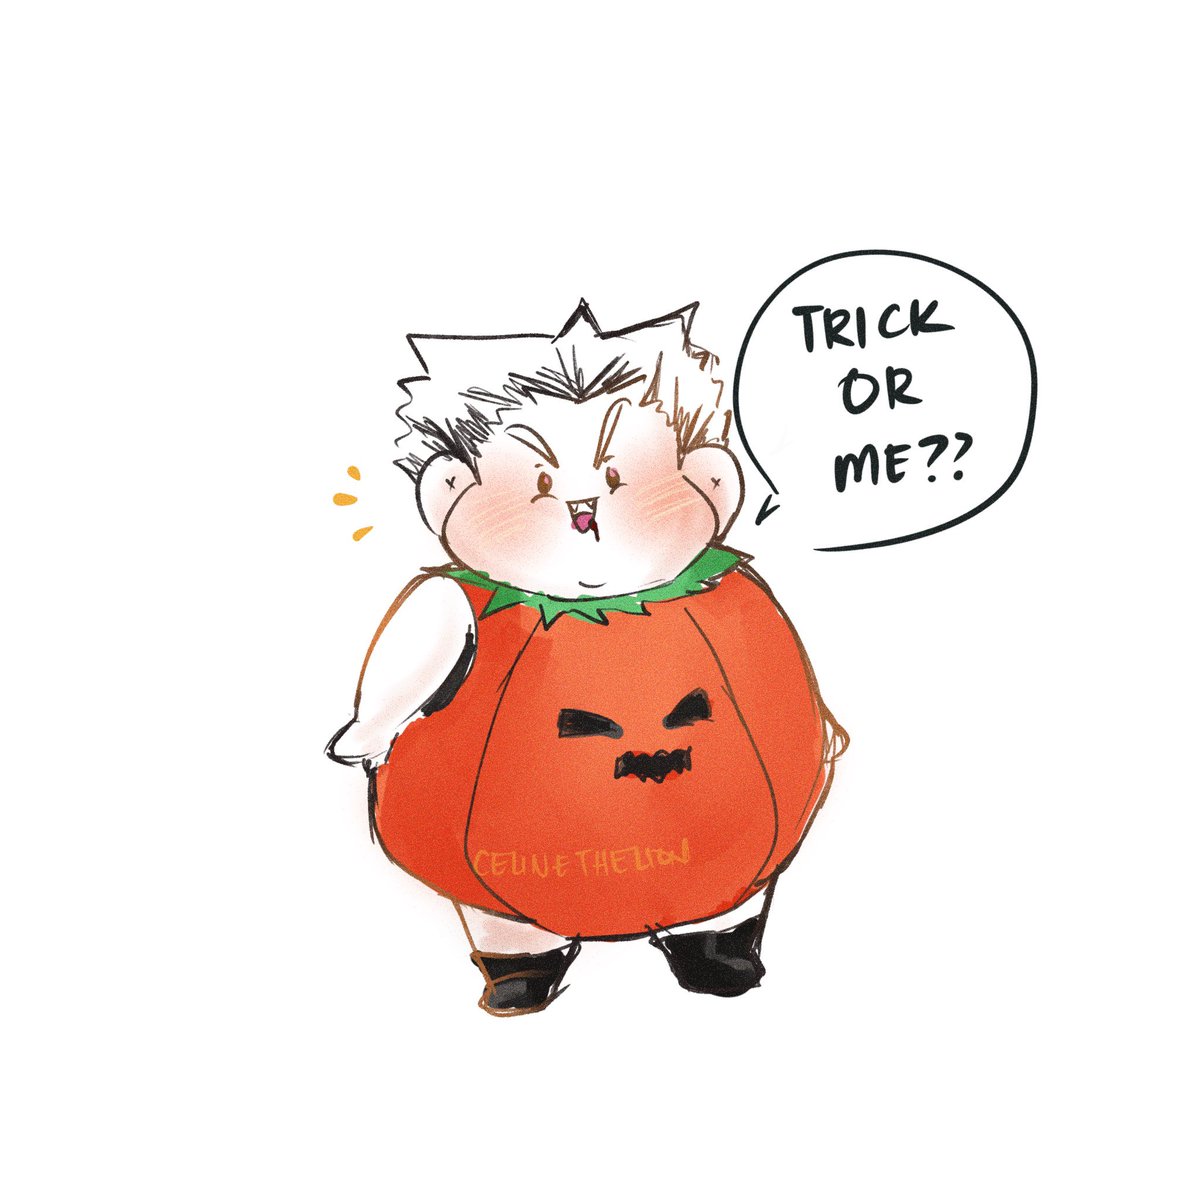 vampire pumpkin and dead person* 😂 
*Their costumes haha #bokuaka 